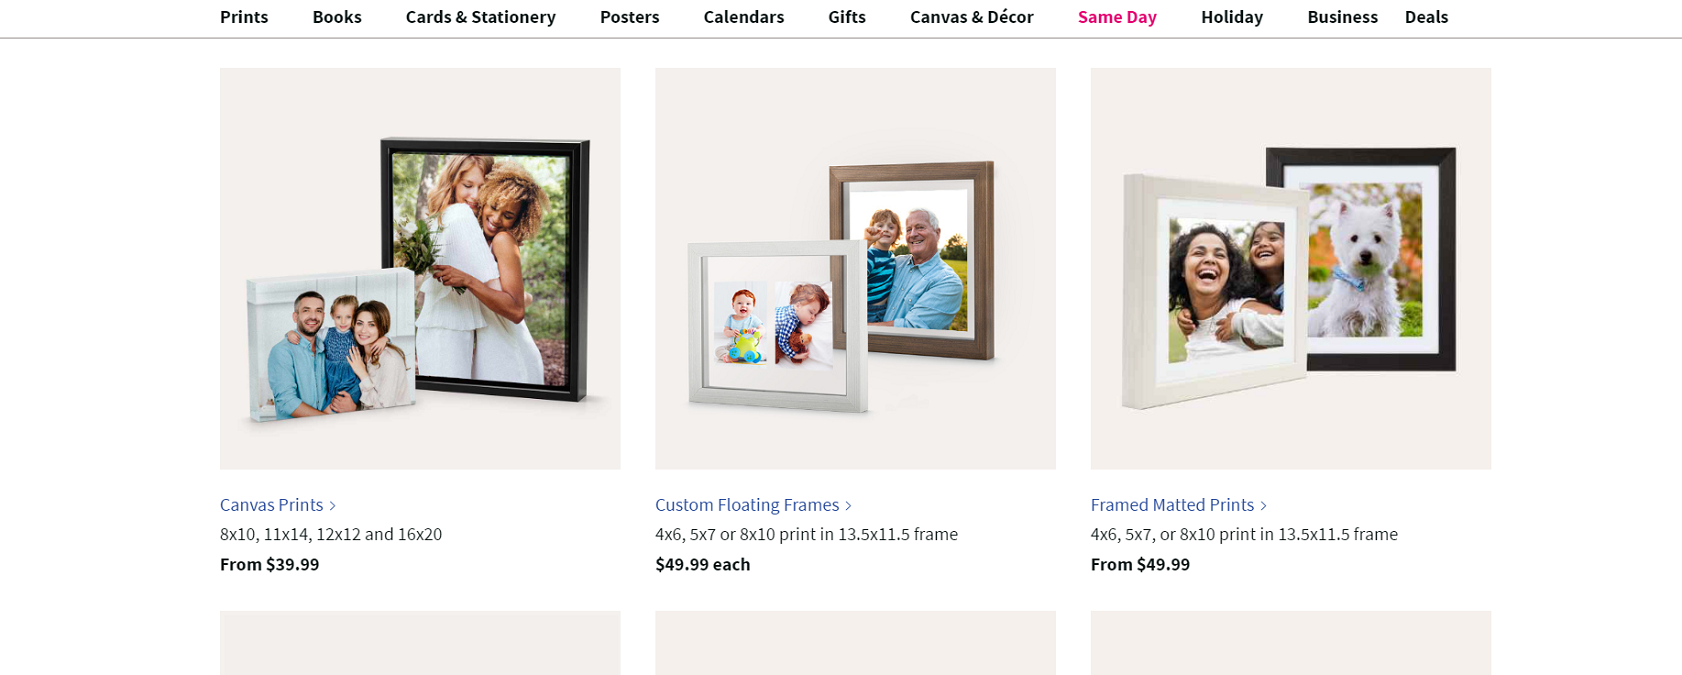 Walgreens Canvas Coupon: 60% Off Canvas + Custom Framed Prints